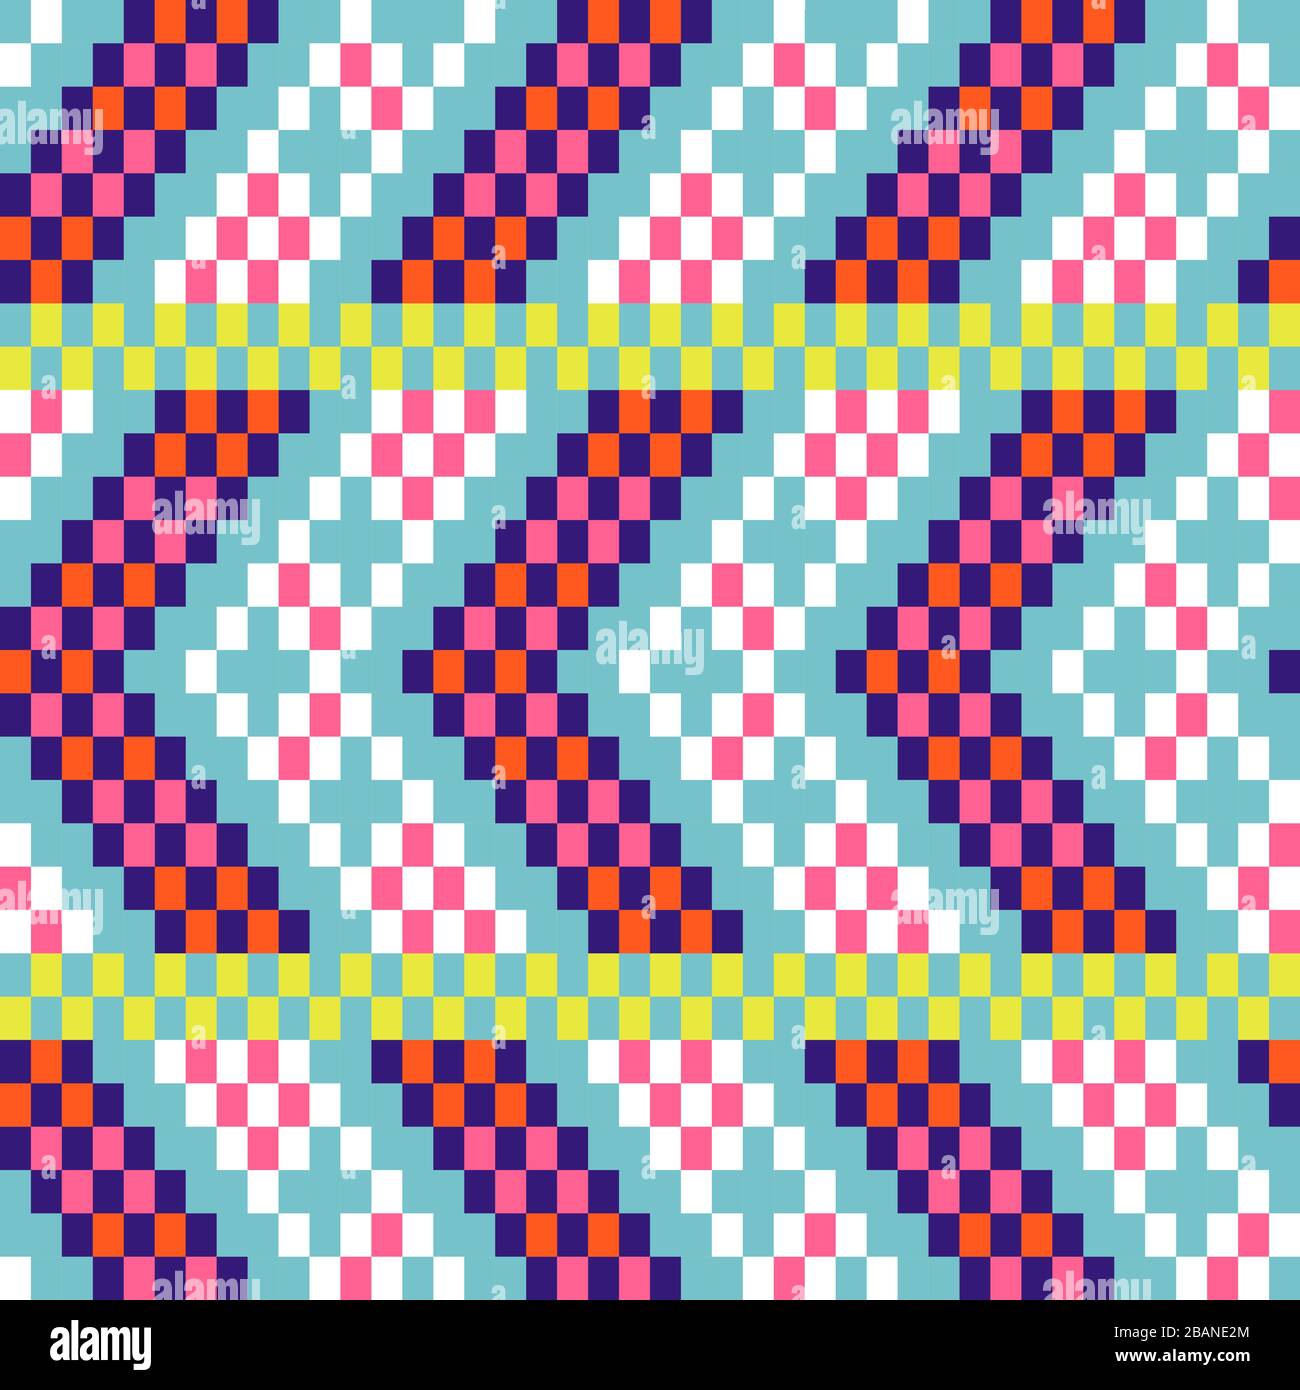 Chevron pixel art seamless pattern blue purple blocks shapes texture. Stock Vector